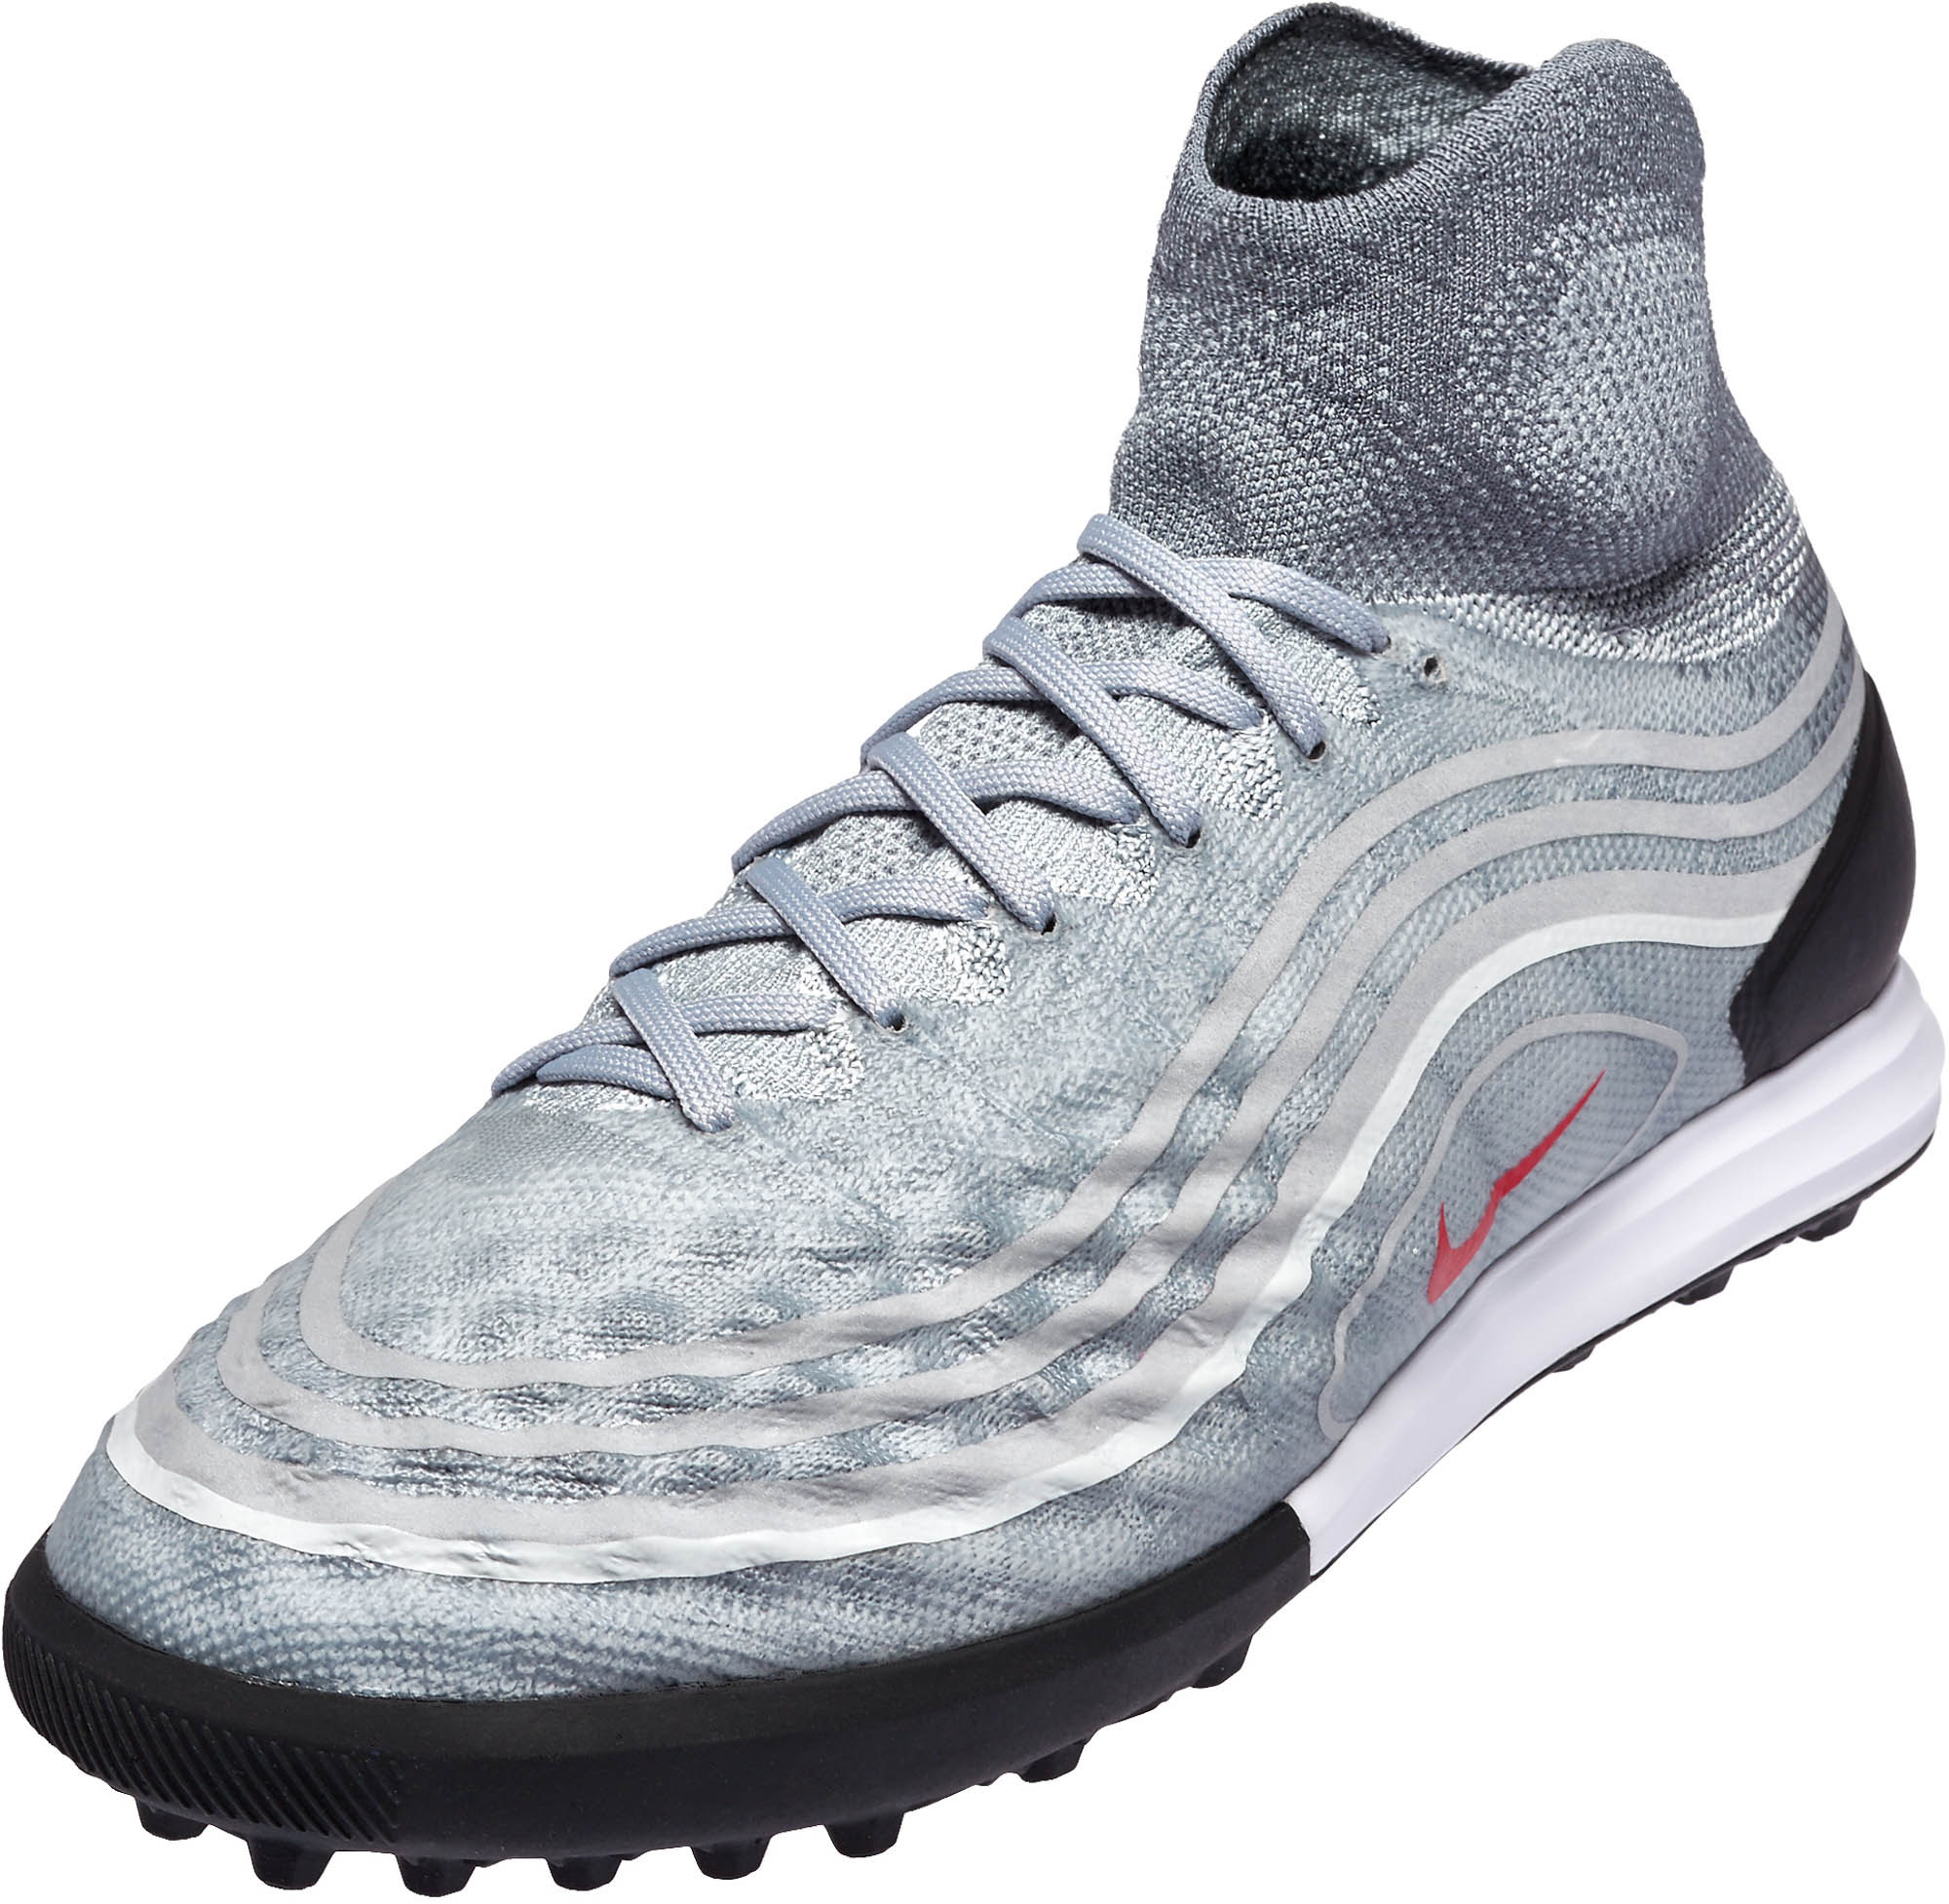 Nike Proximo II Turf Soccer Shoes - Grey